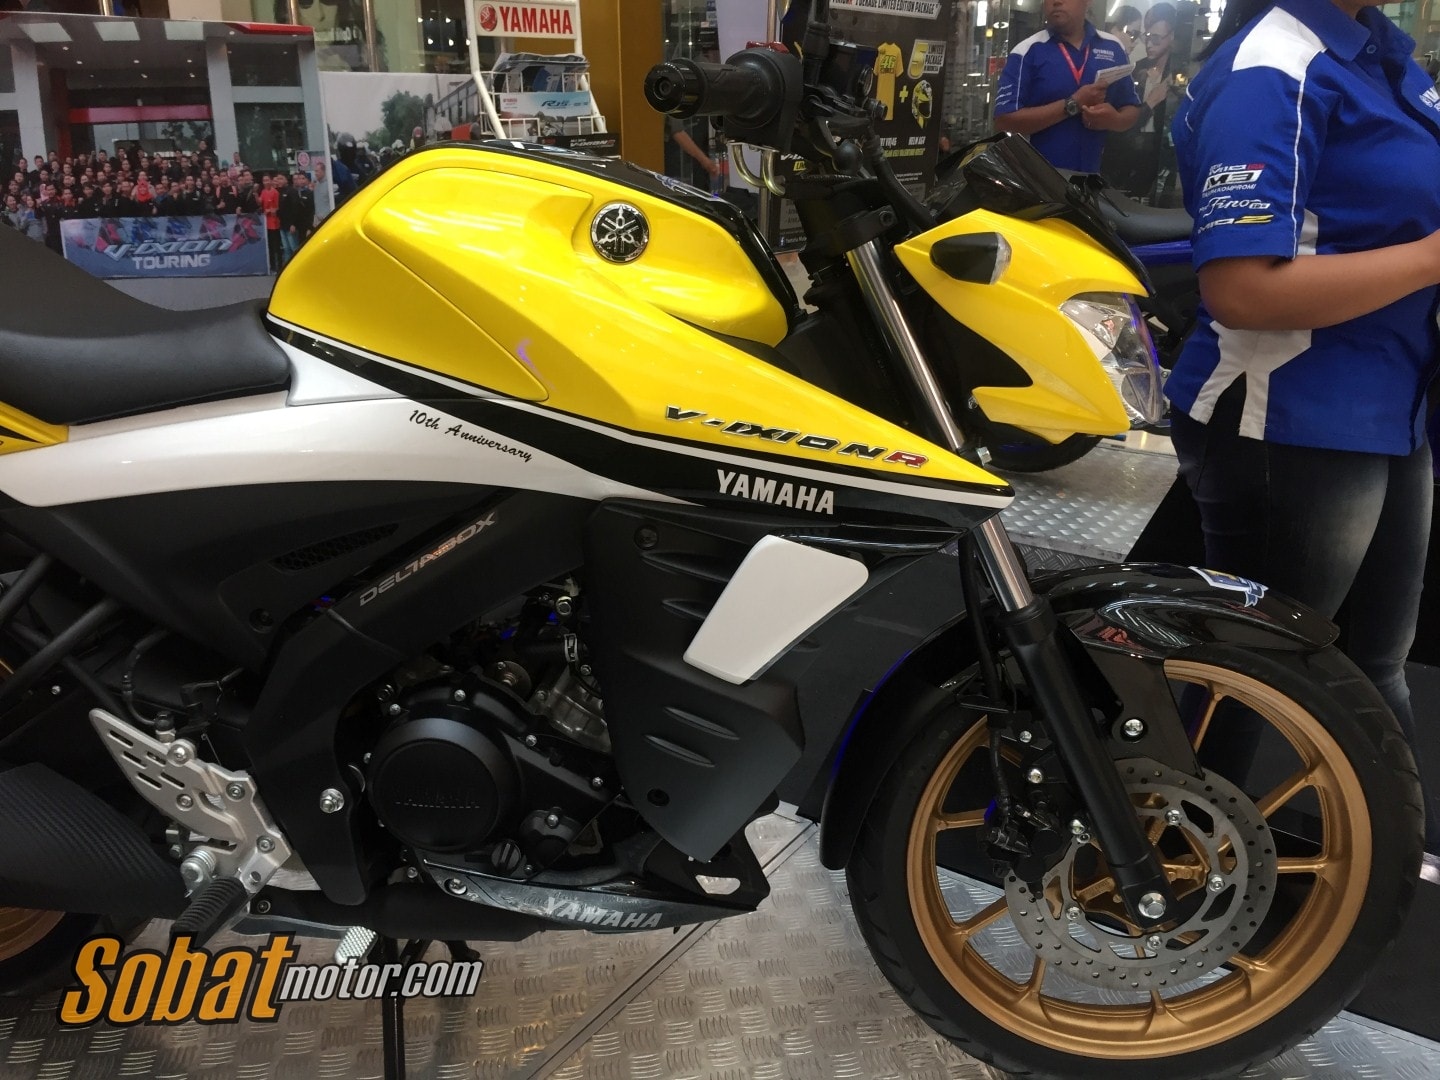 Photo Gallery : Impresi pertama New Yamaha Vixion R Limited Edition, keren sob ! #vixionR_1dekade